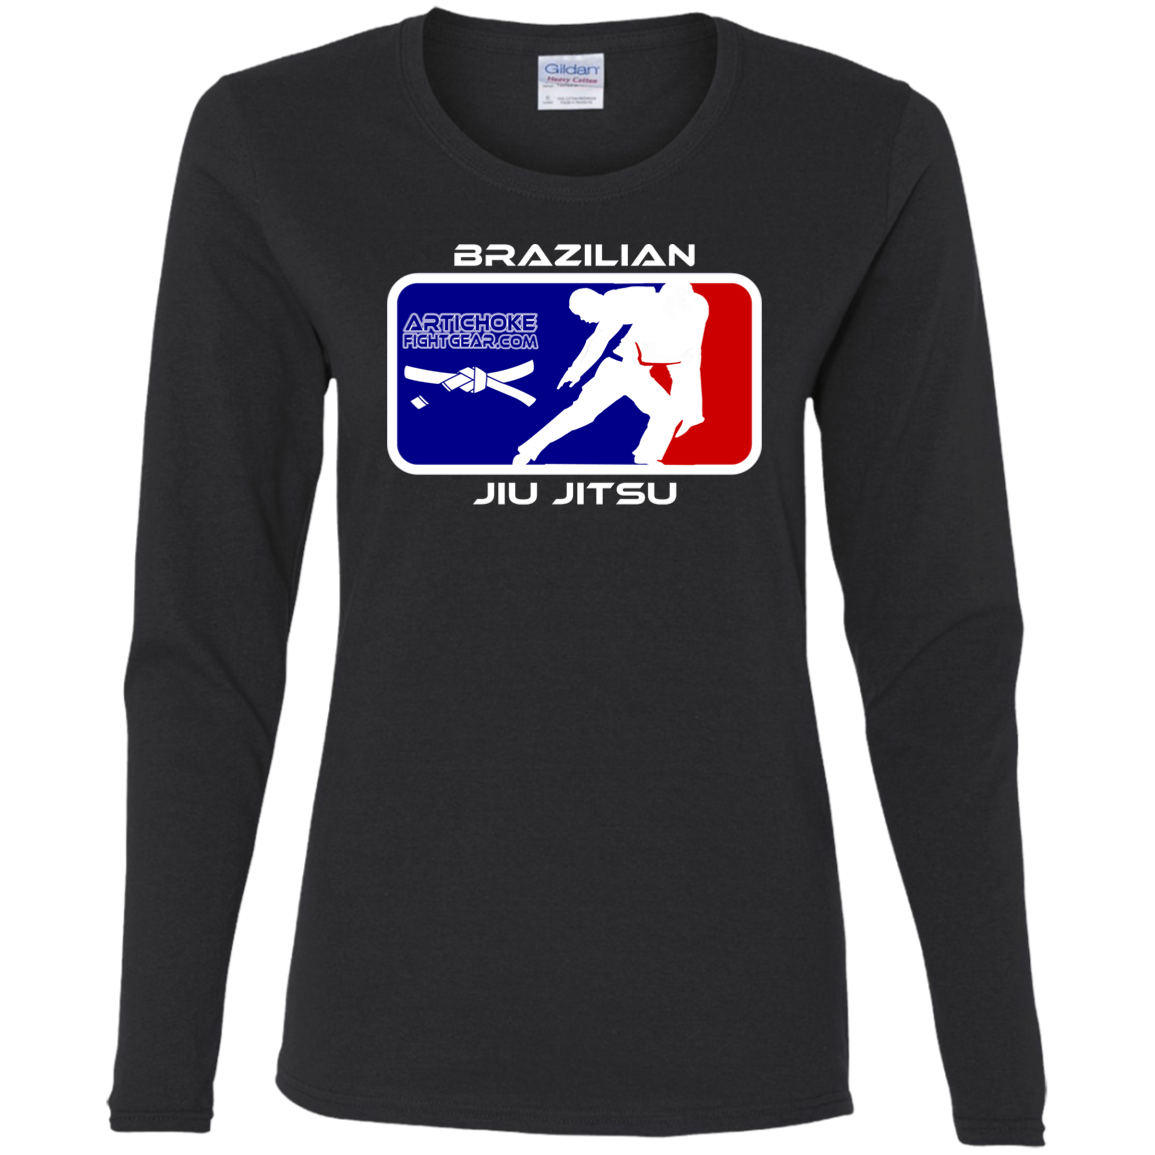 Artichoke Fight Gear Custom Design #4. MLB style BJJ. Ladies' 100% Pre-Shrunk Cotton Long Sleeve